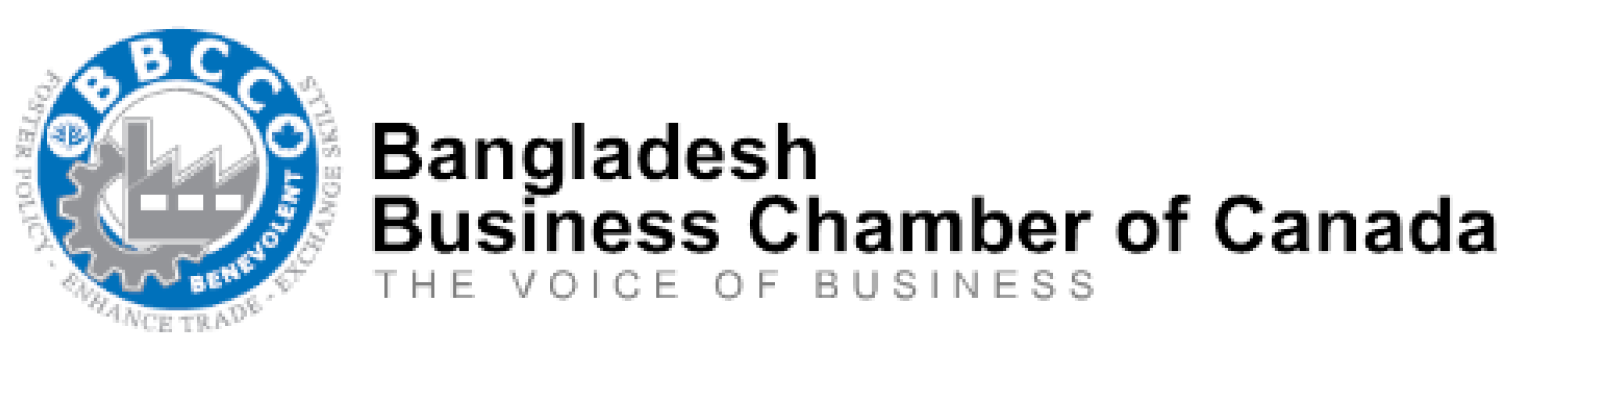 Bangladesh Business Chamber of Canada (BBCC)